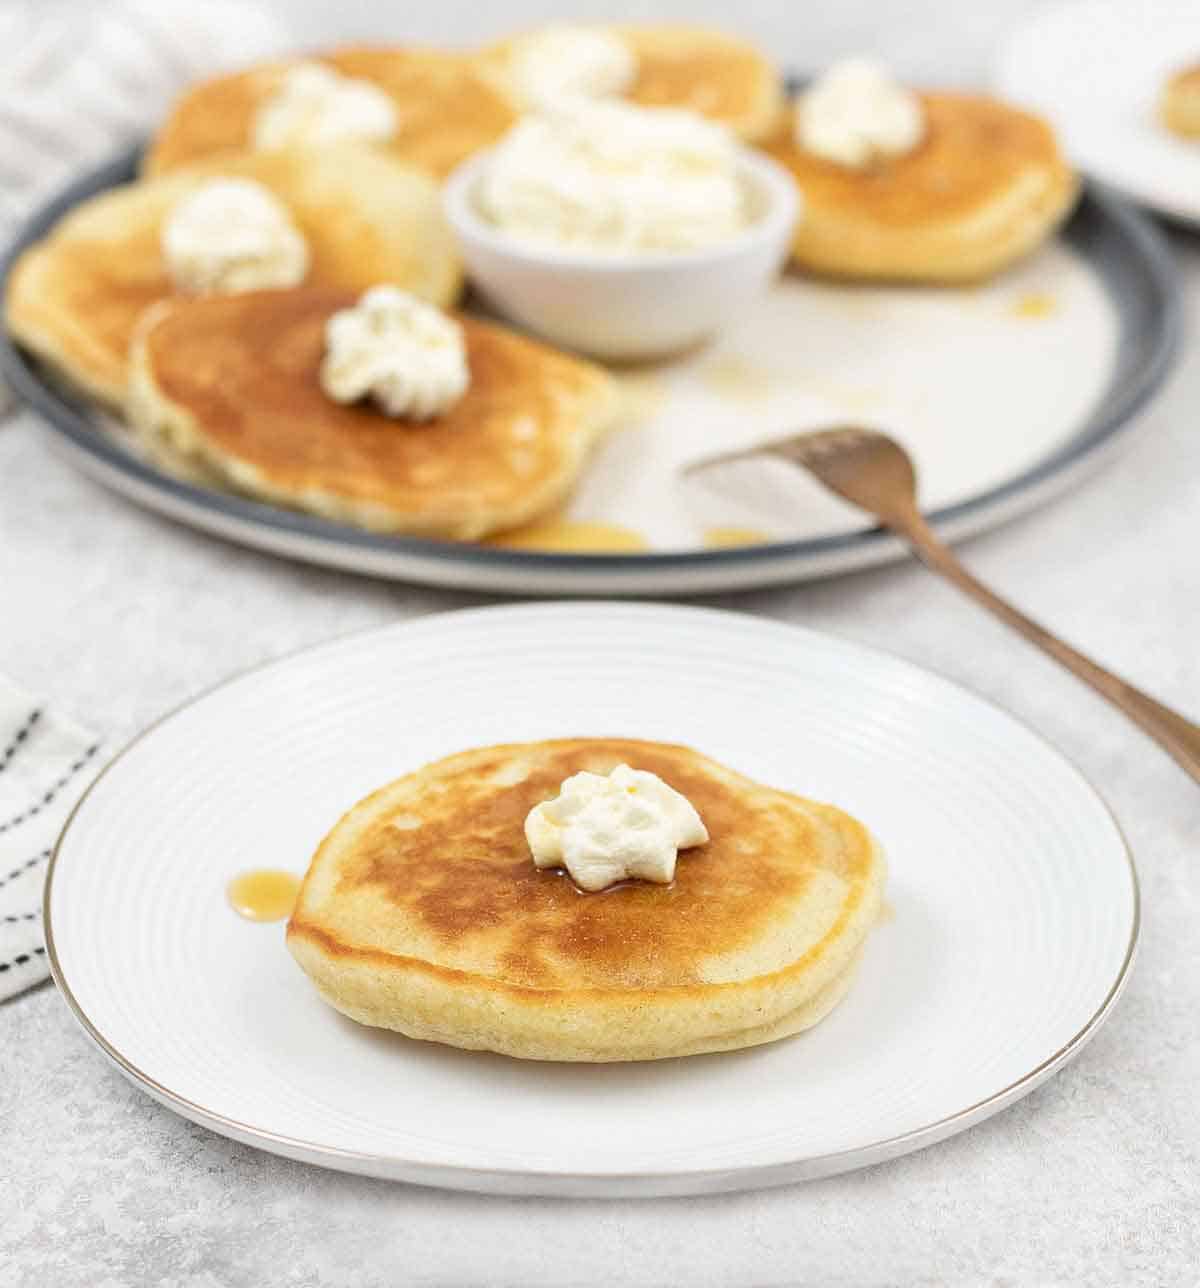 one sweet cream pancake in a plate